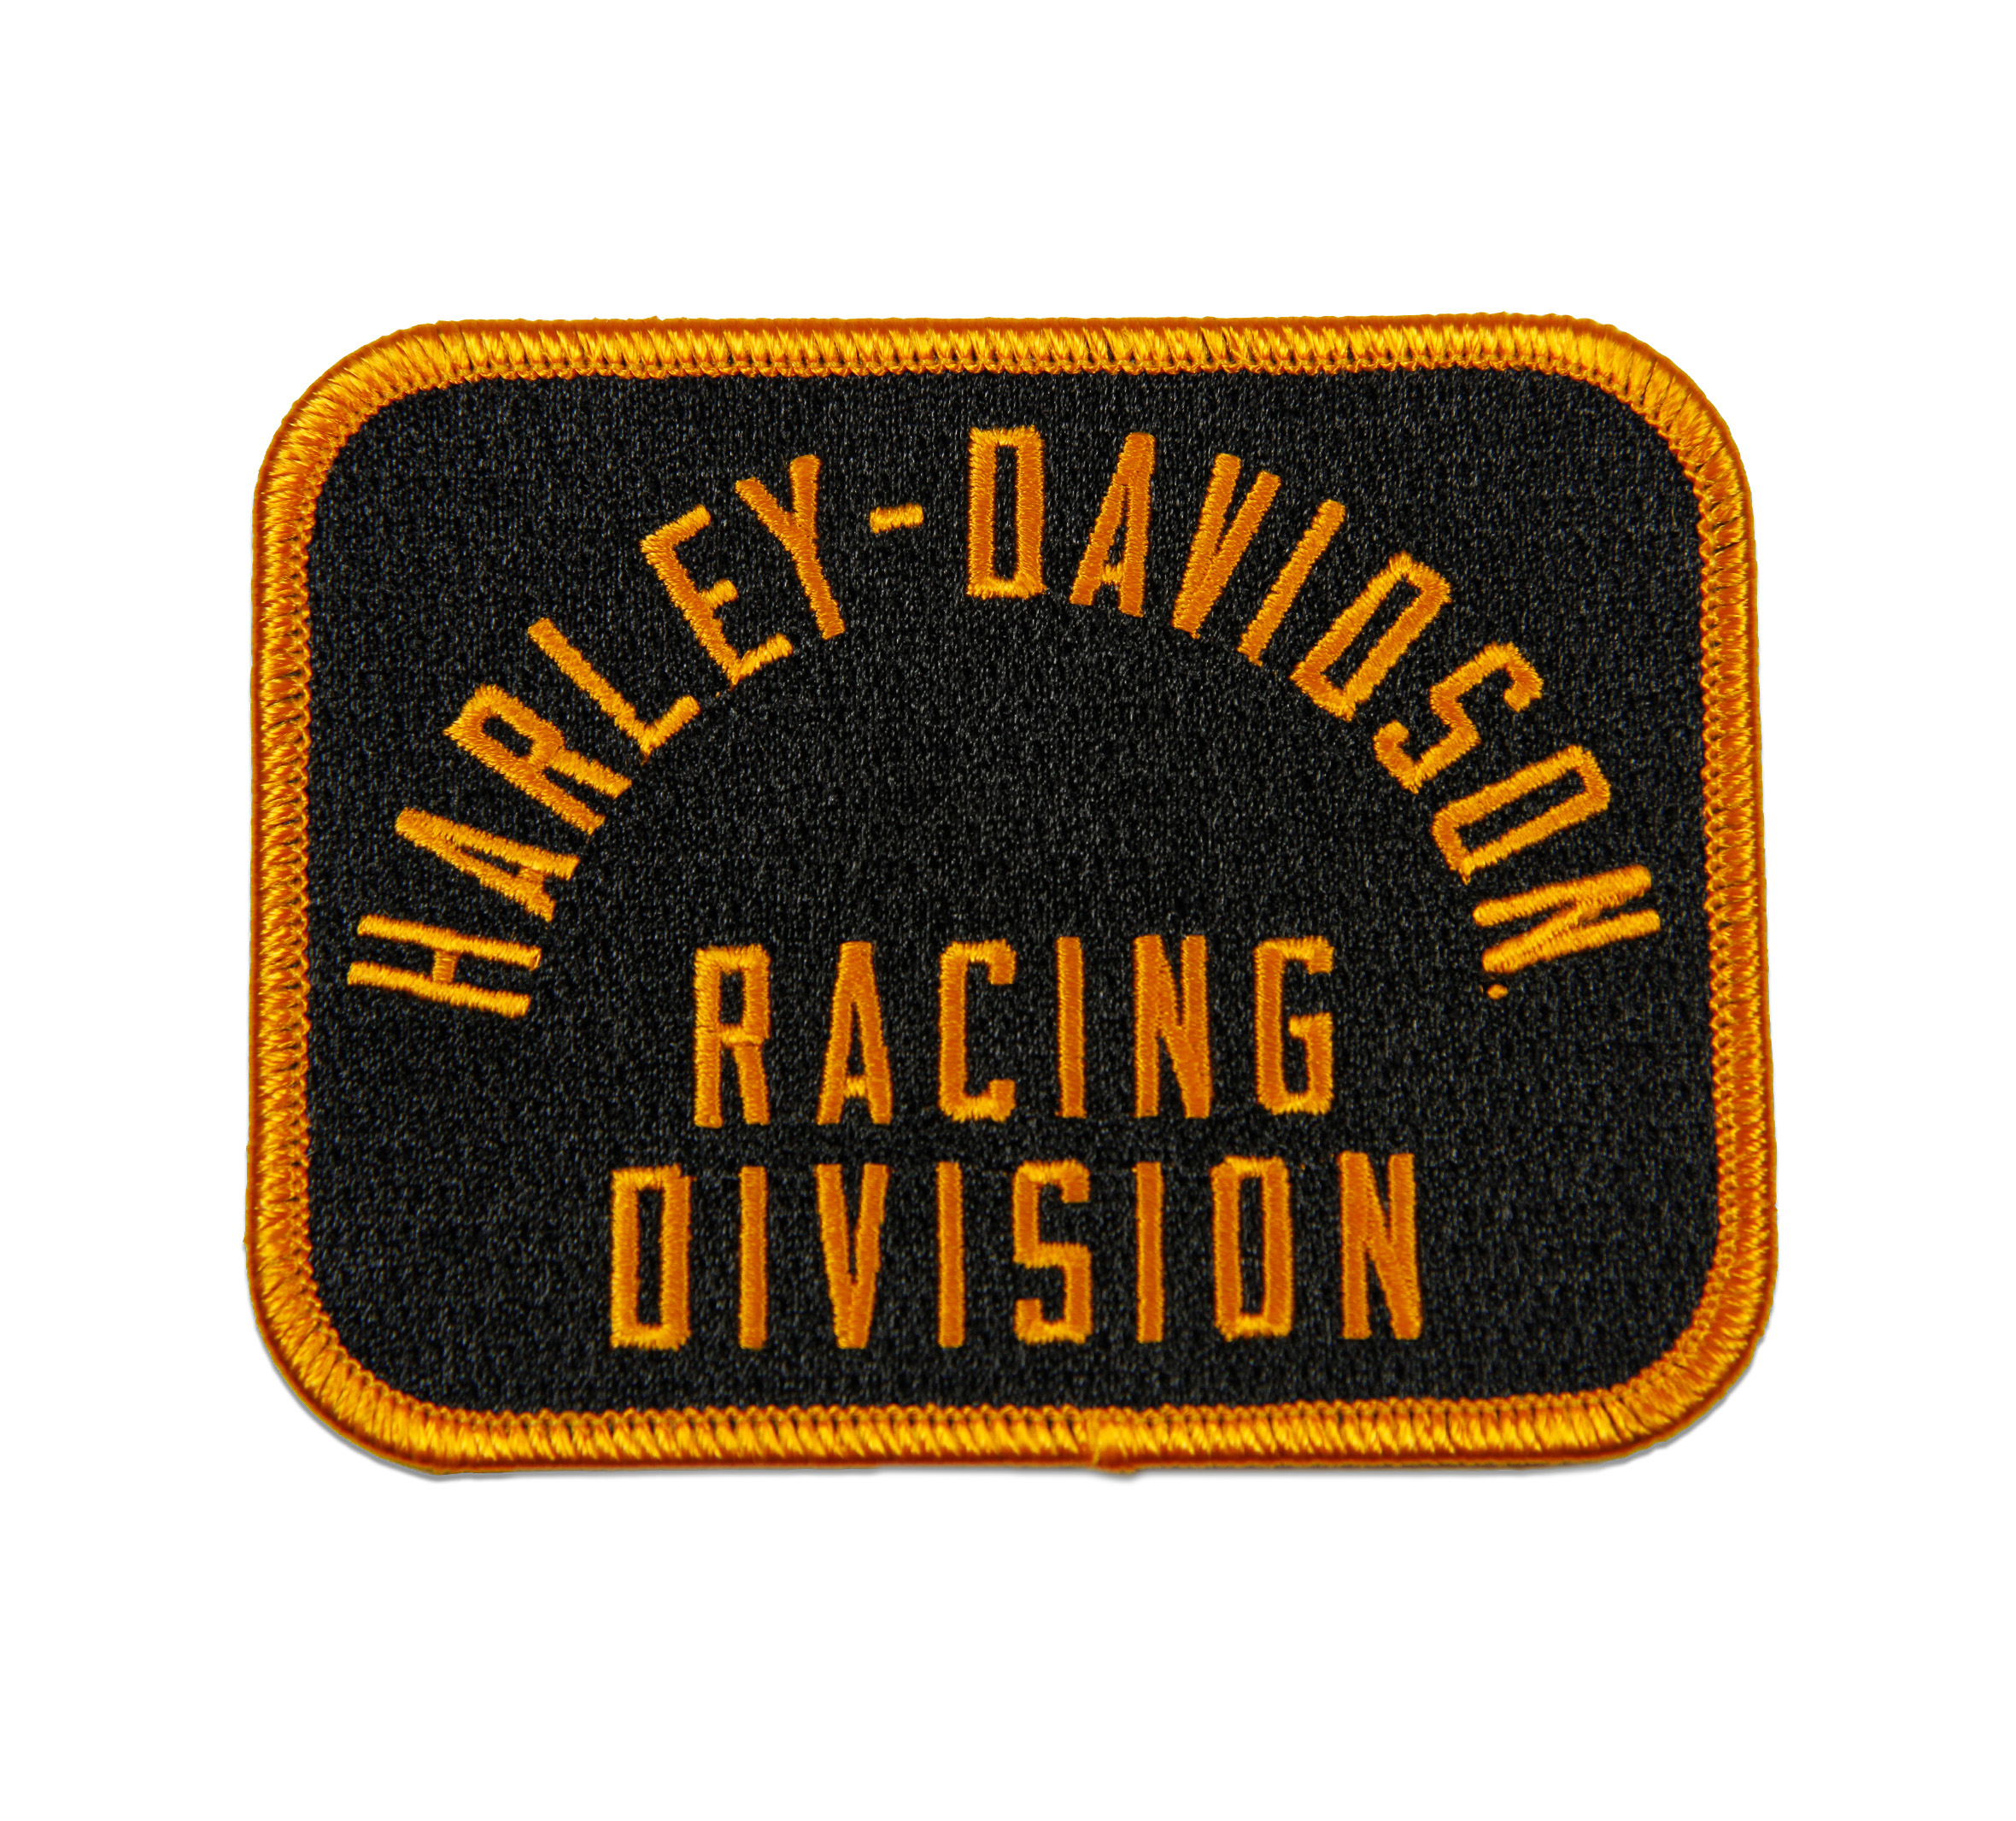 Vintage Harley Davidson Patch - 4.5 x 2